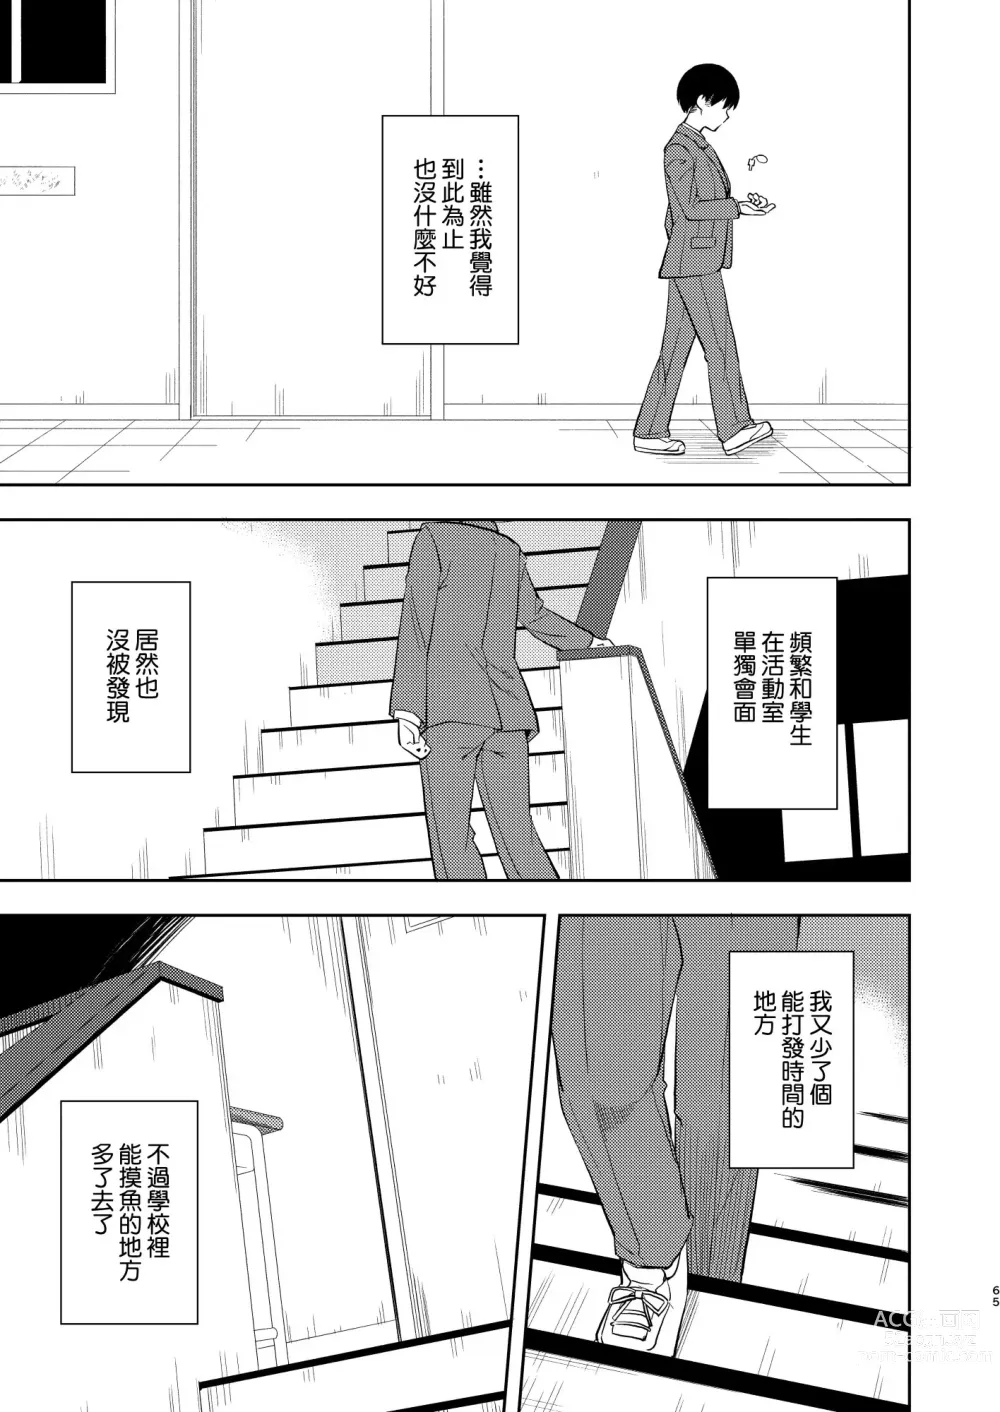 Page 67 of doujinshi Nagisa Lingerie